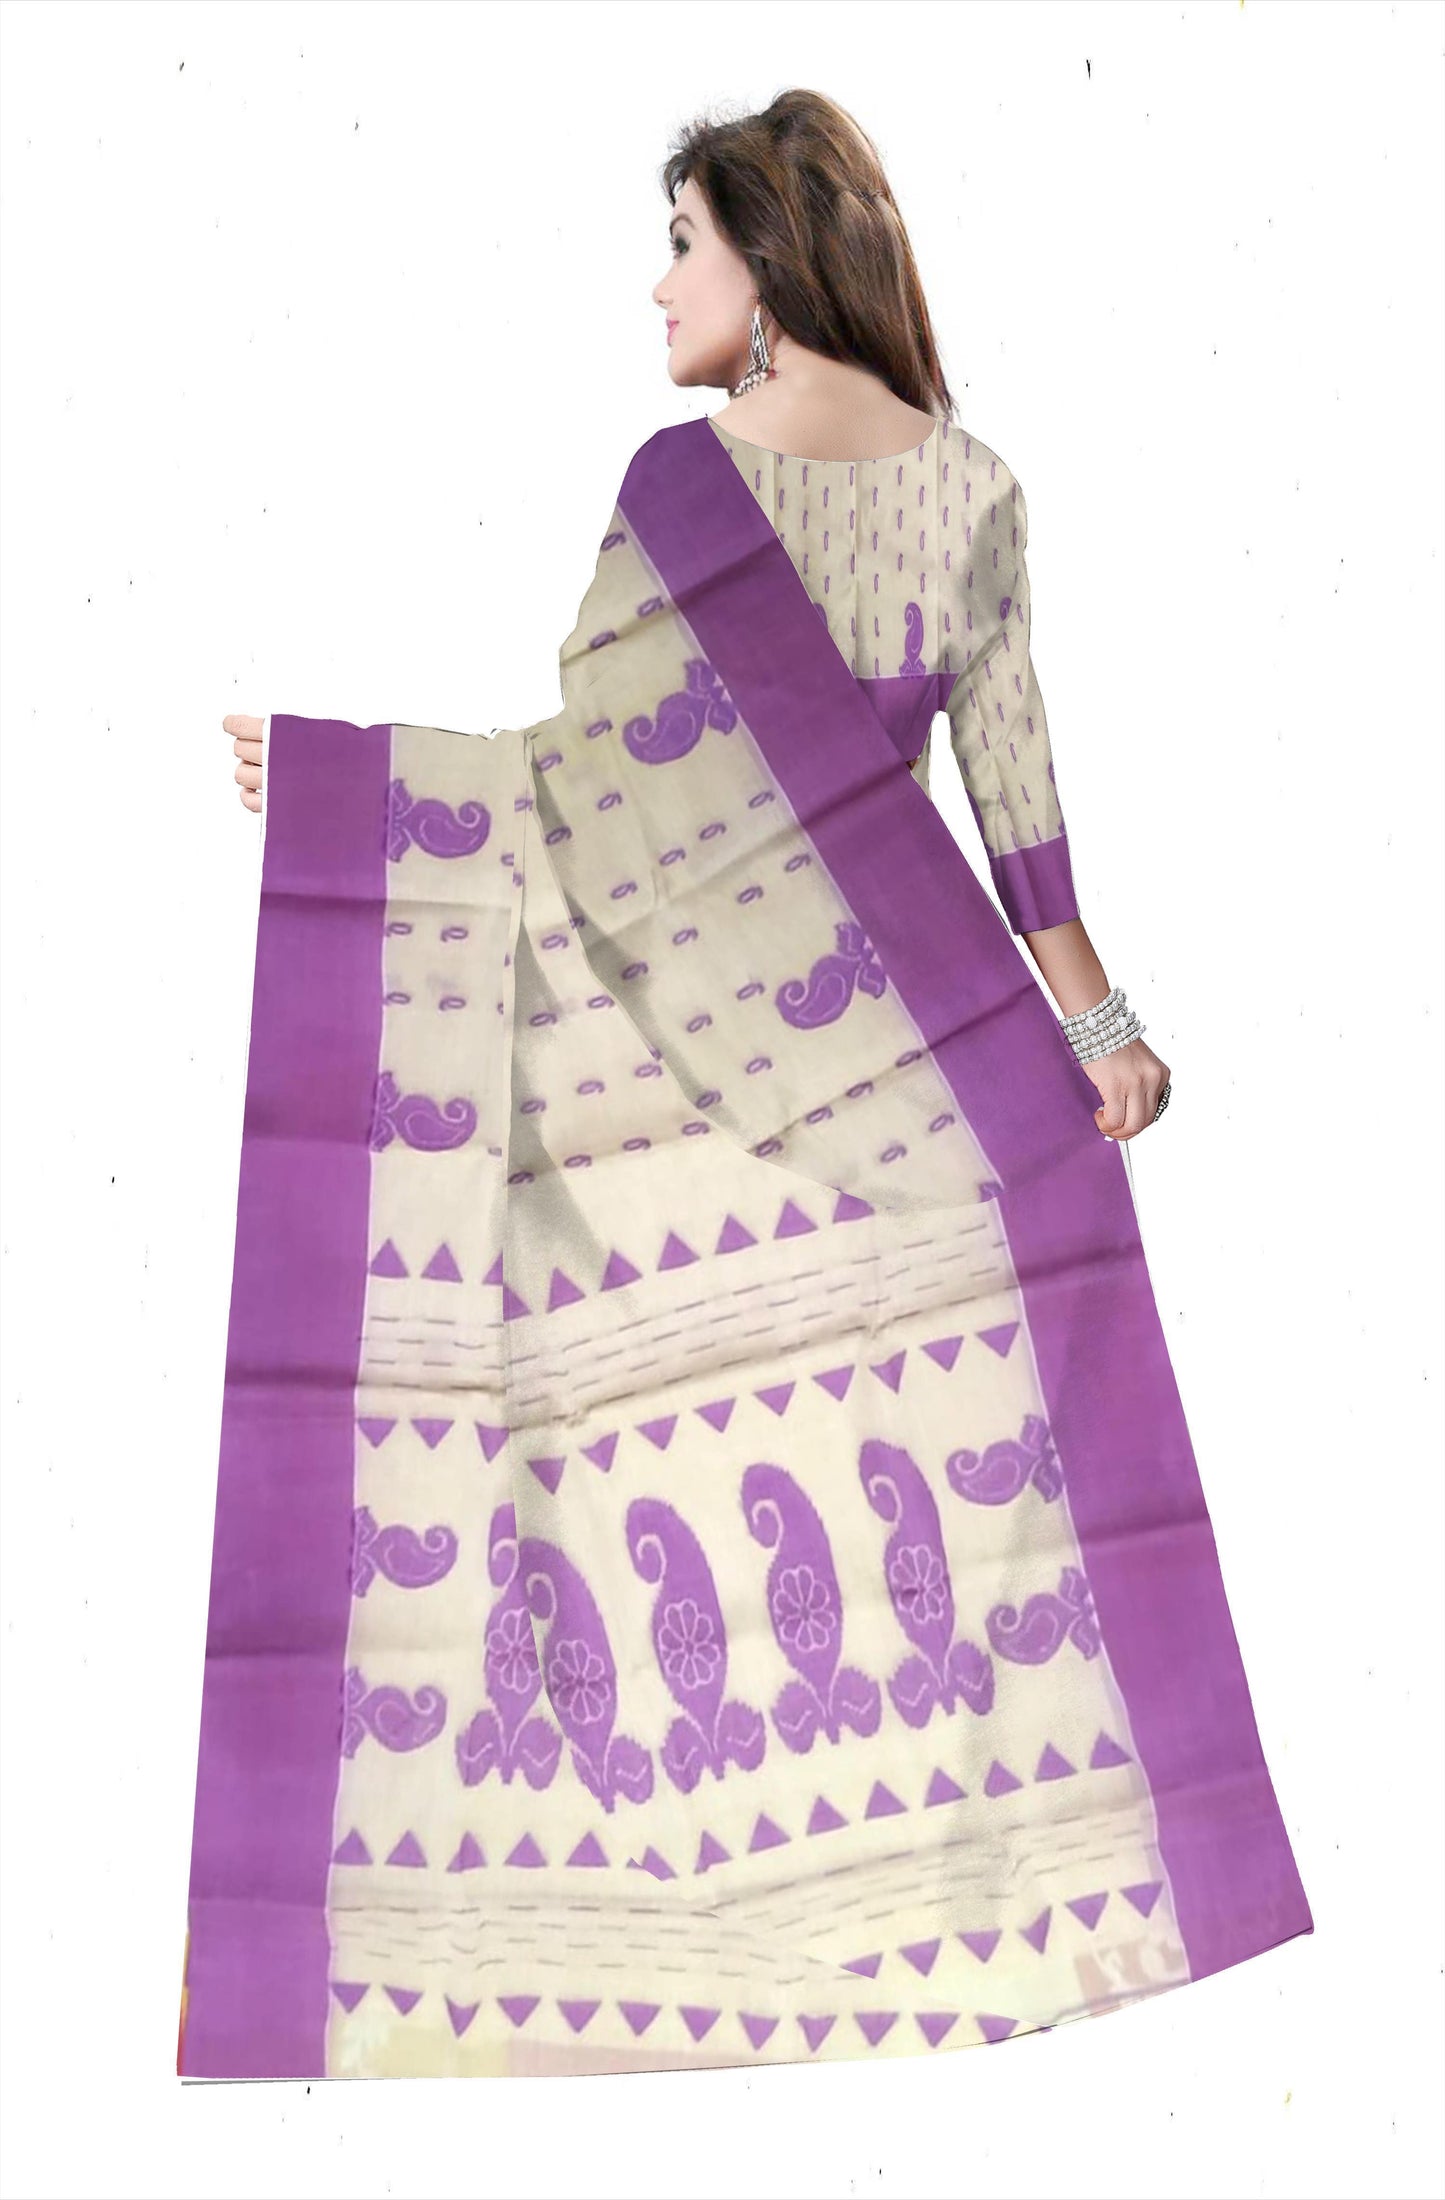 Pradip Fabrics Ethnic Women's Pure 100% Tant Cotton Cream Body and Pink Border Saree